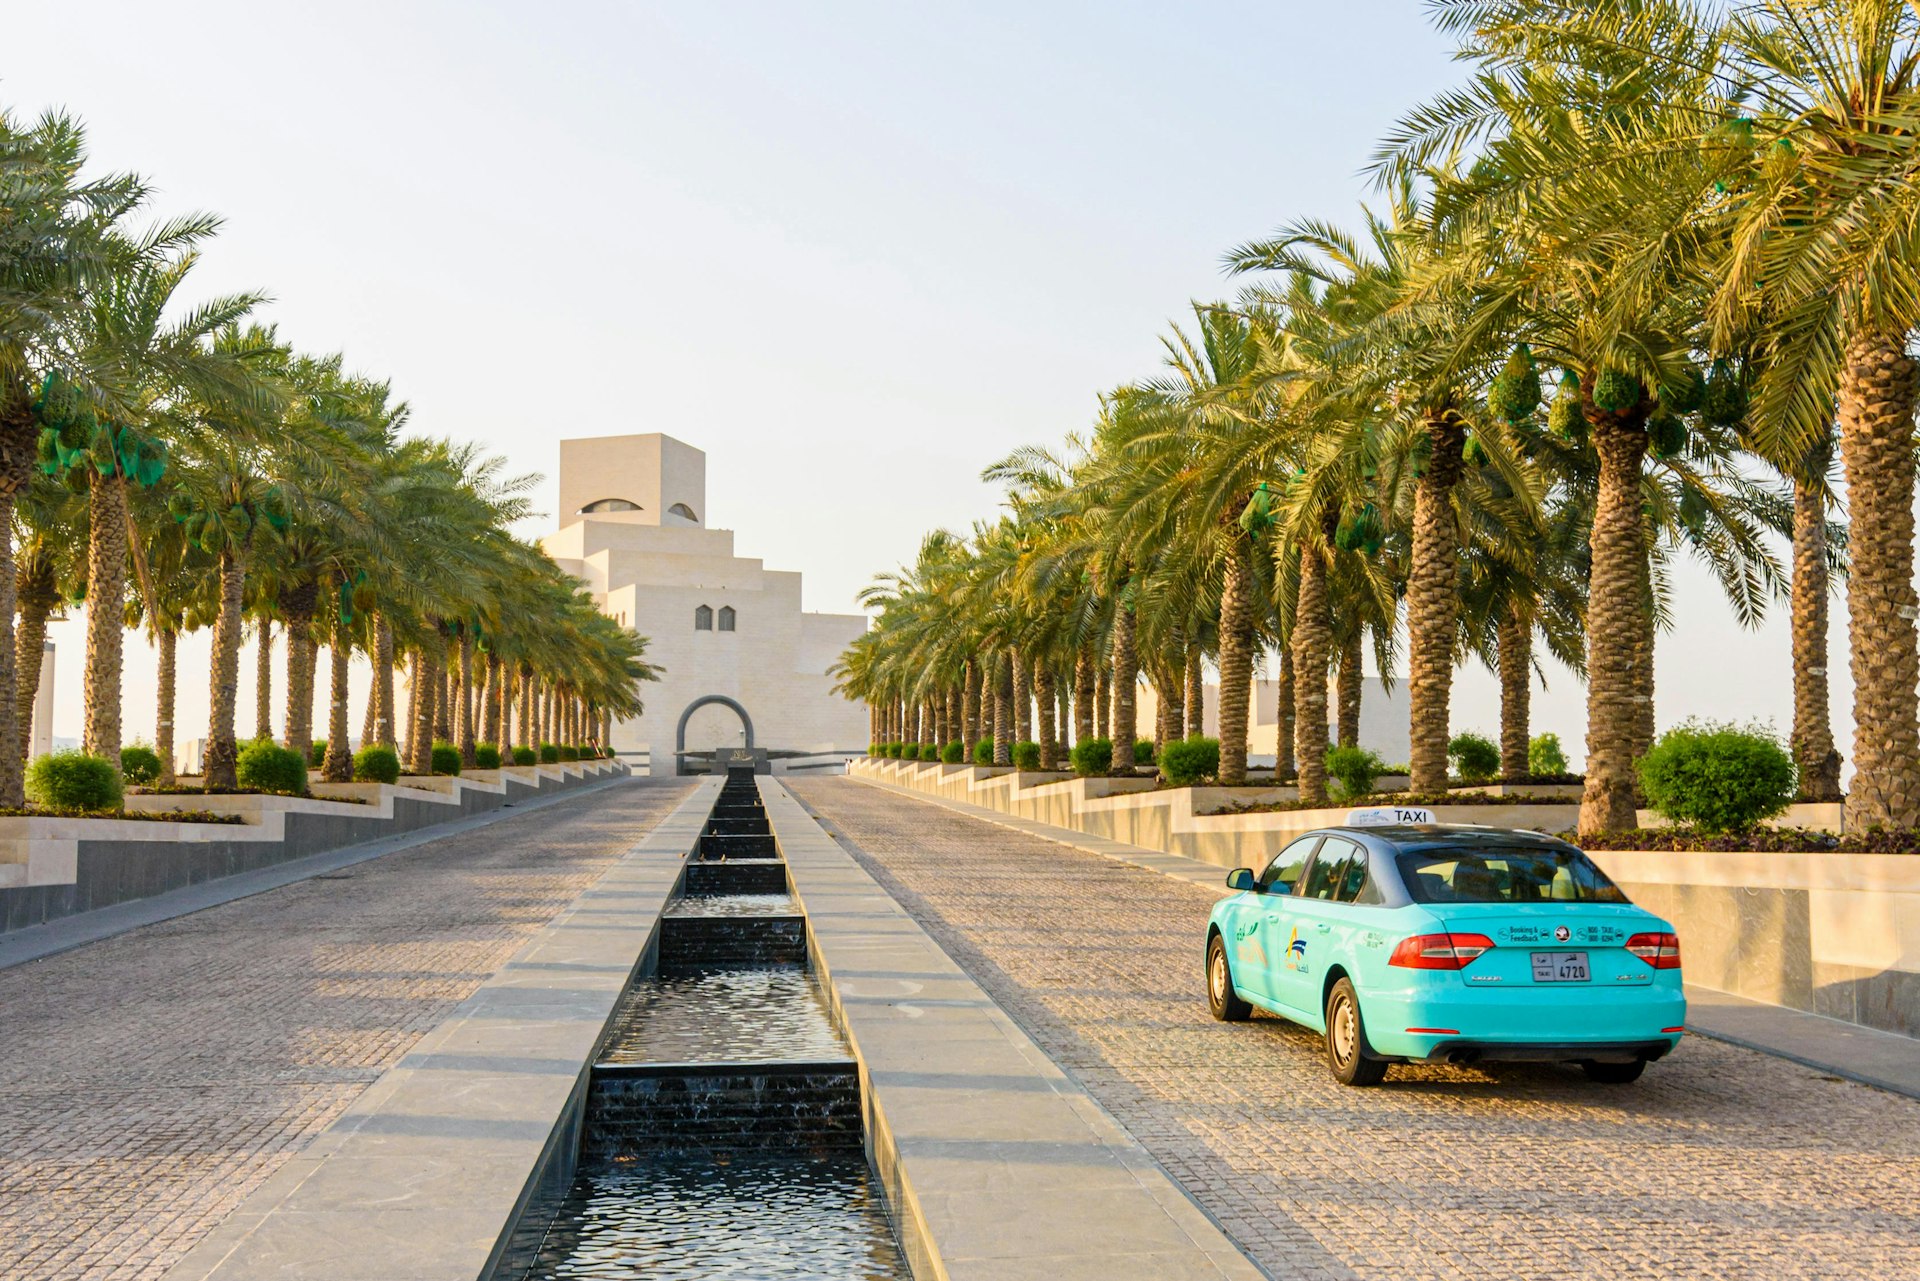 Karwa taxi approaching the Museum of Islamic Art, Doha, Qatar